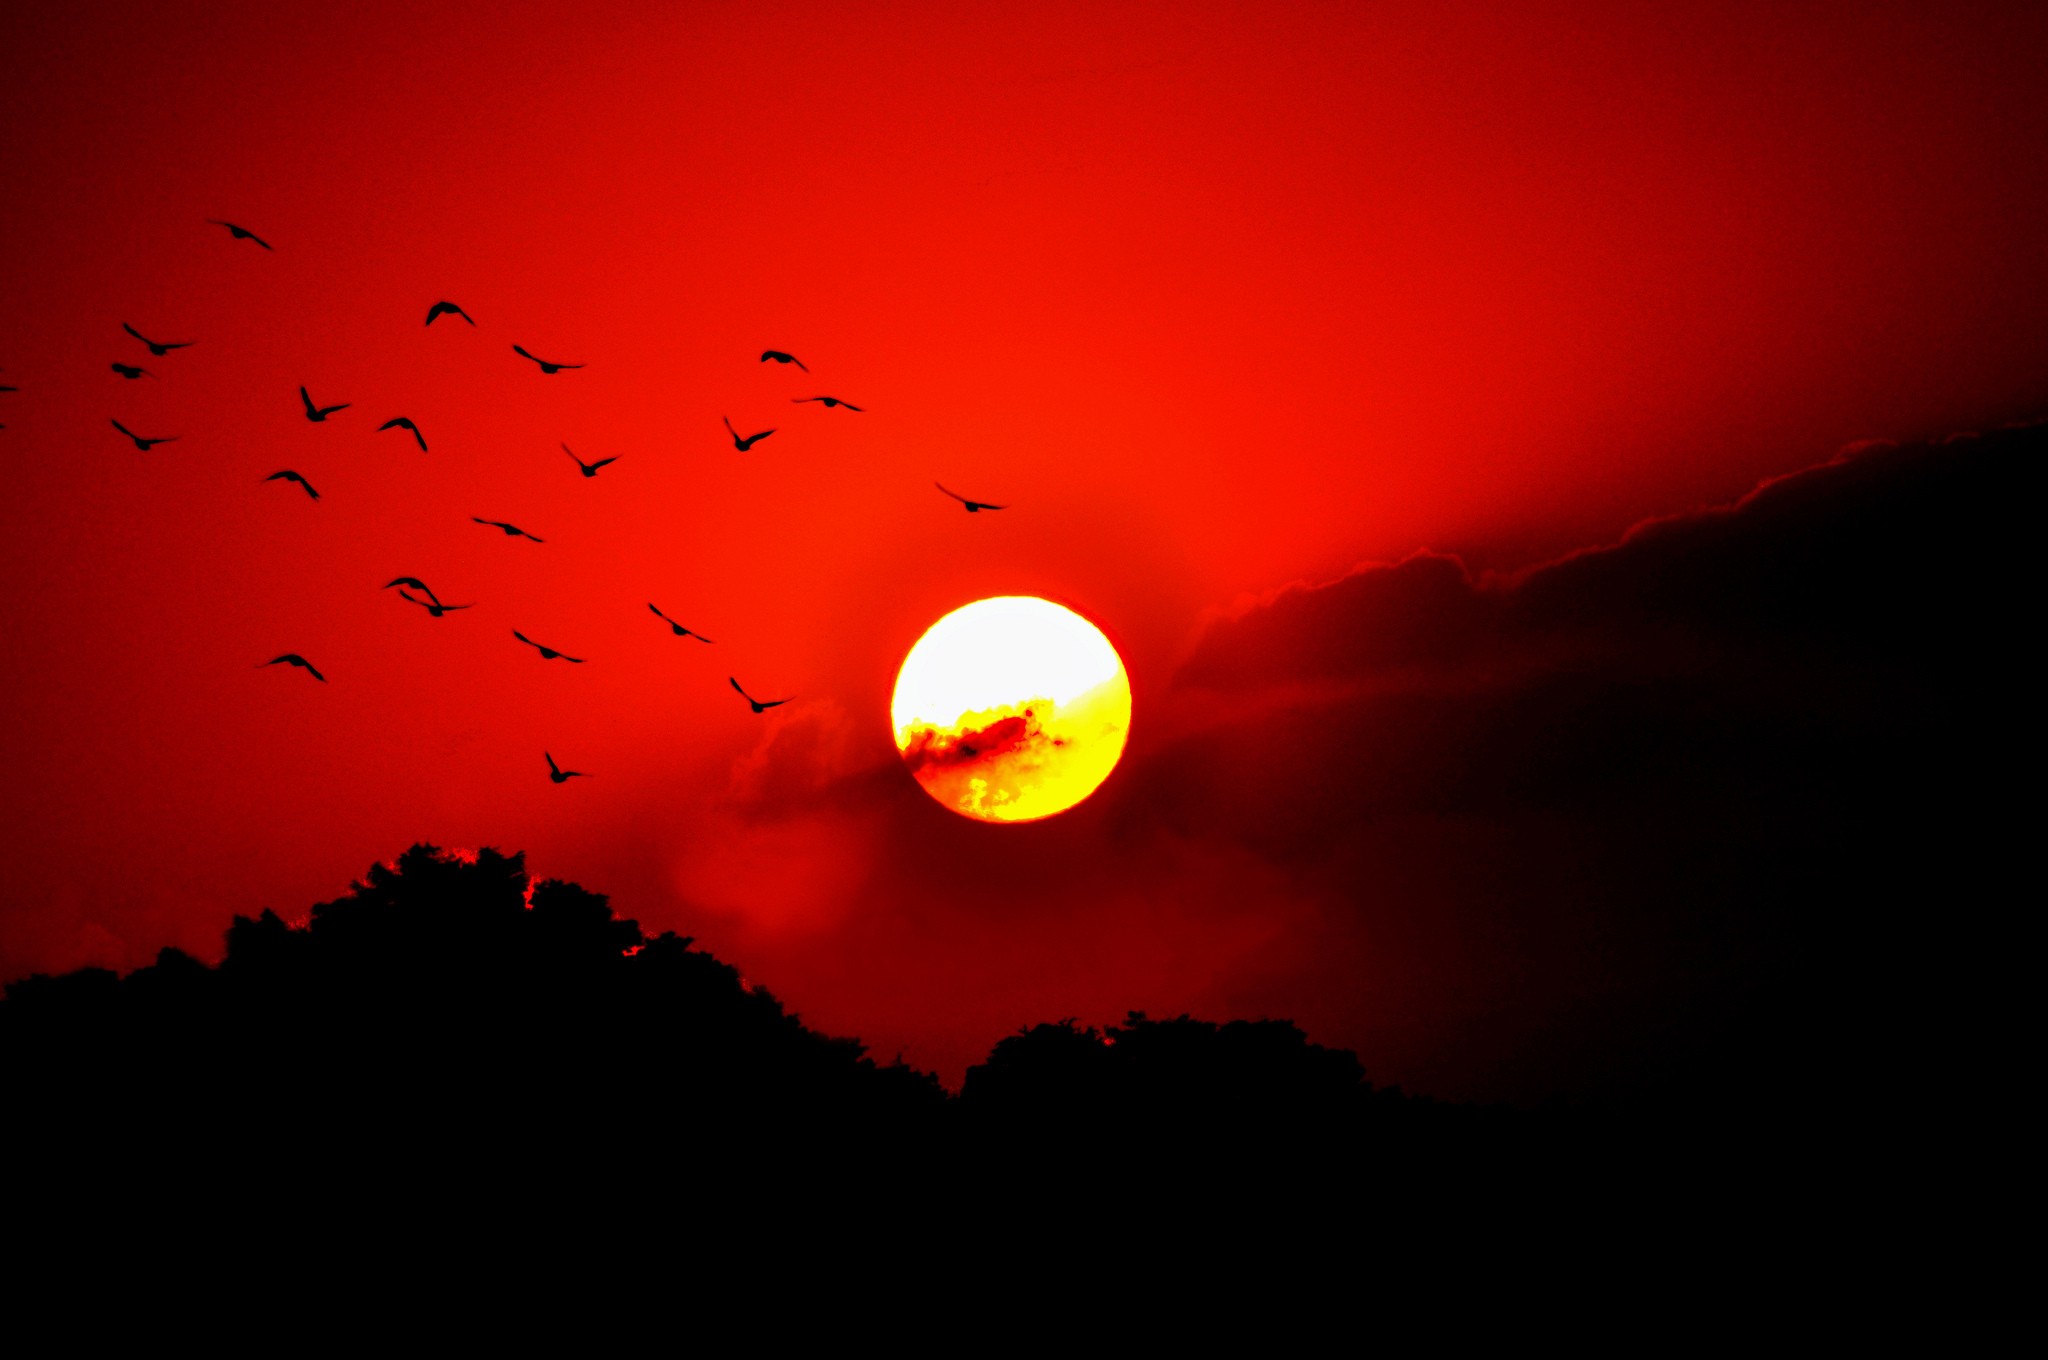 General 2048x1360 landscape Sun sky birds red dark red sky animals sunlight